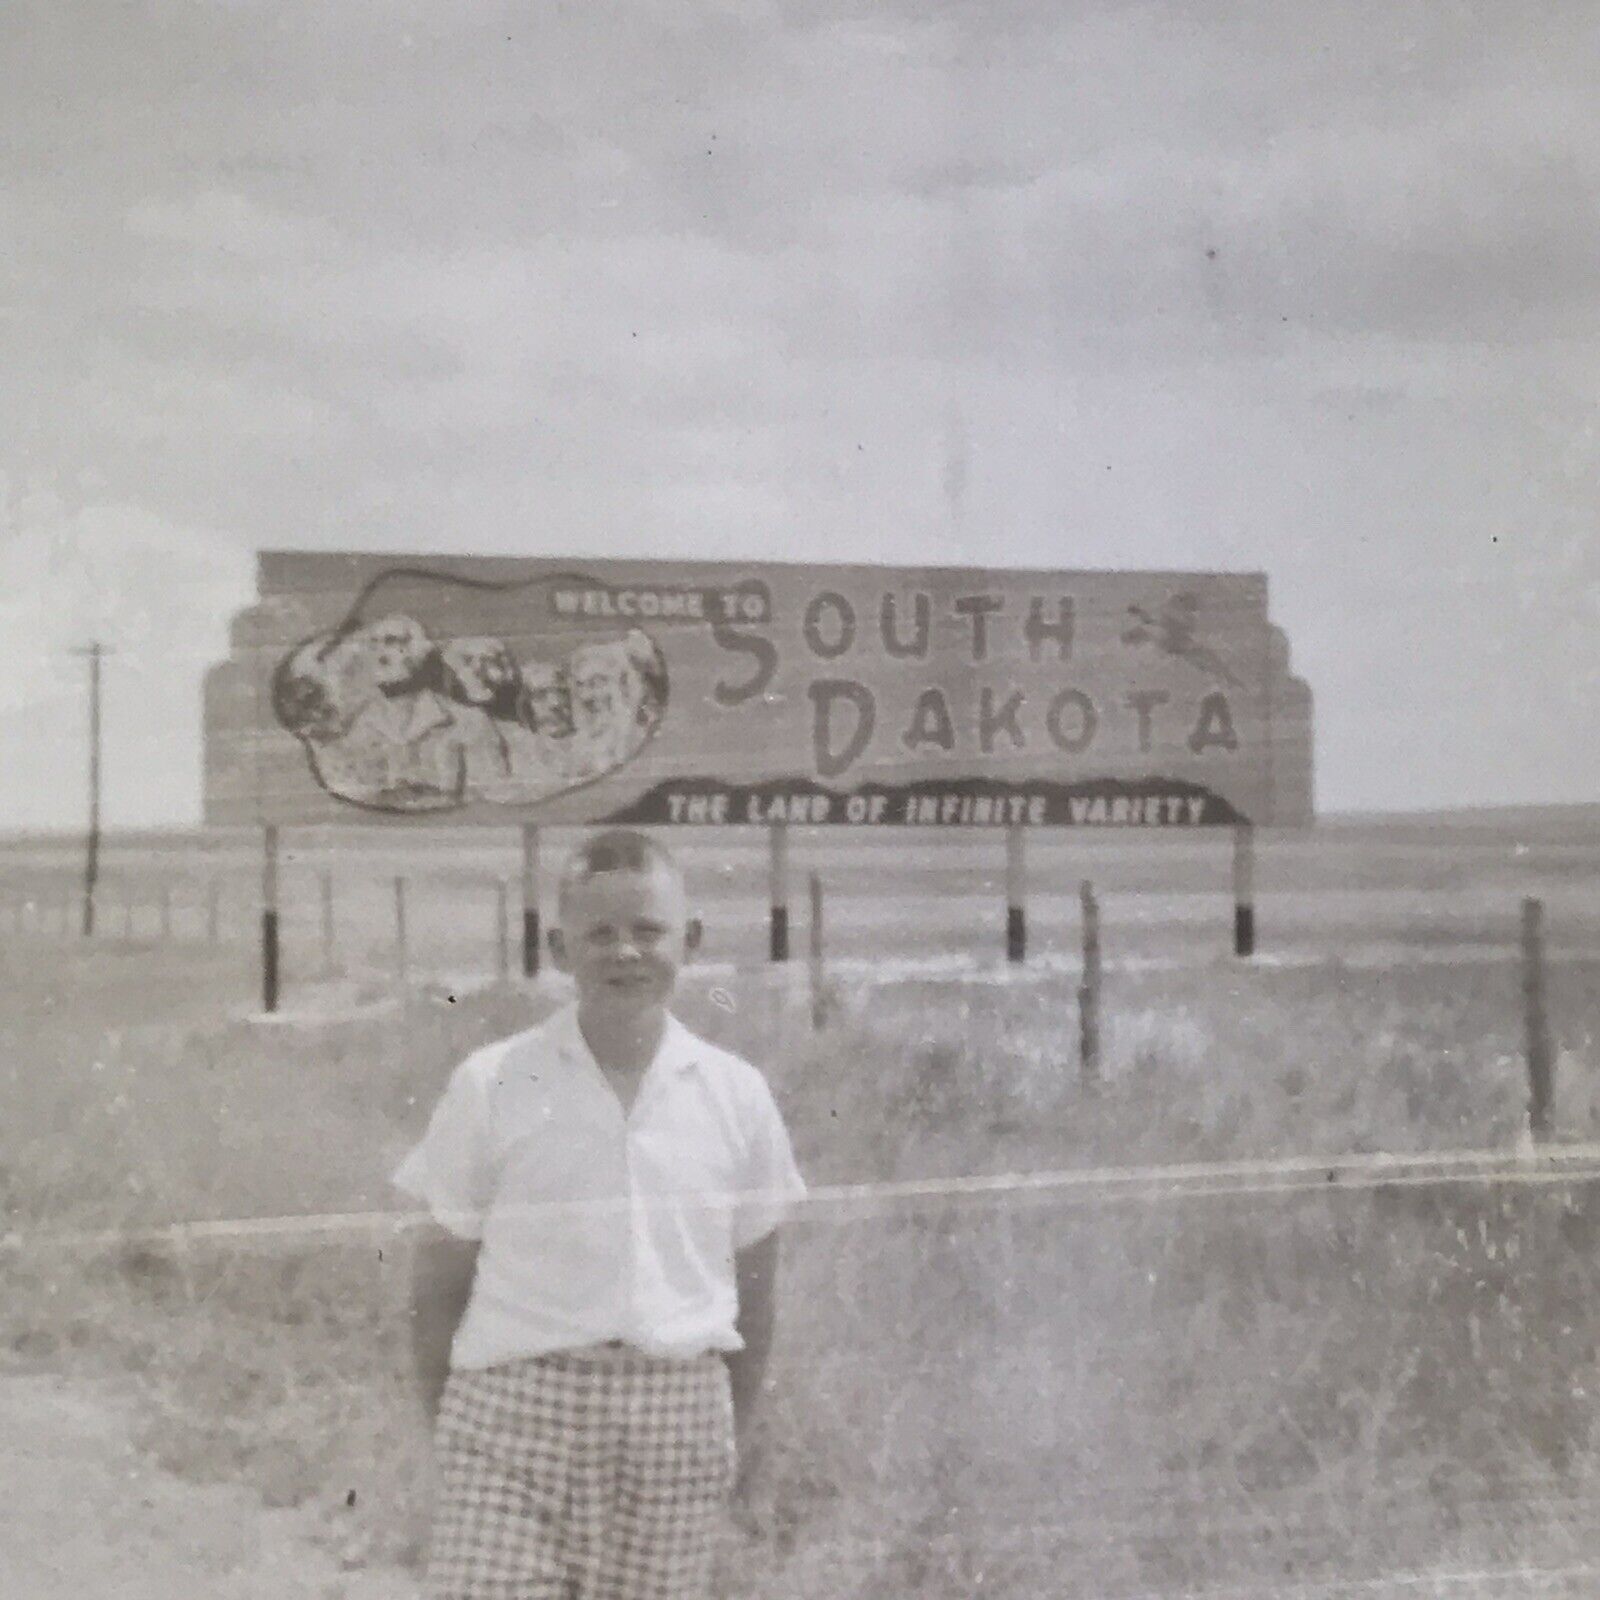 Vintage Sepia Photo Welcome To South Dakota Land Of Infinite Variety Billboard